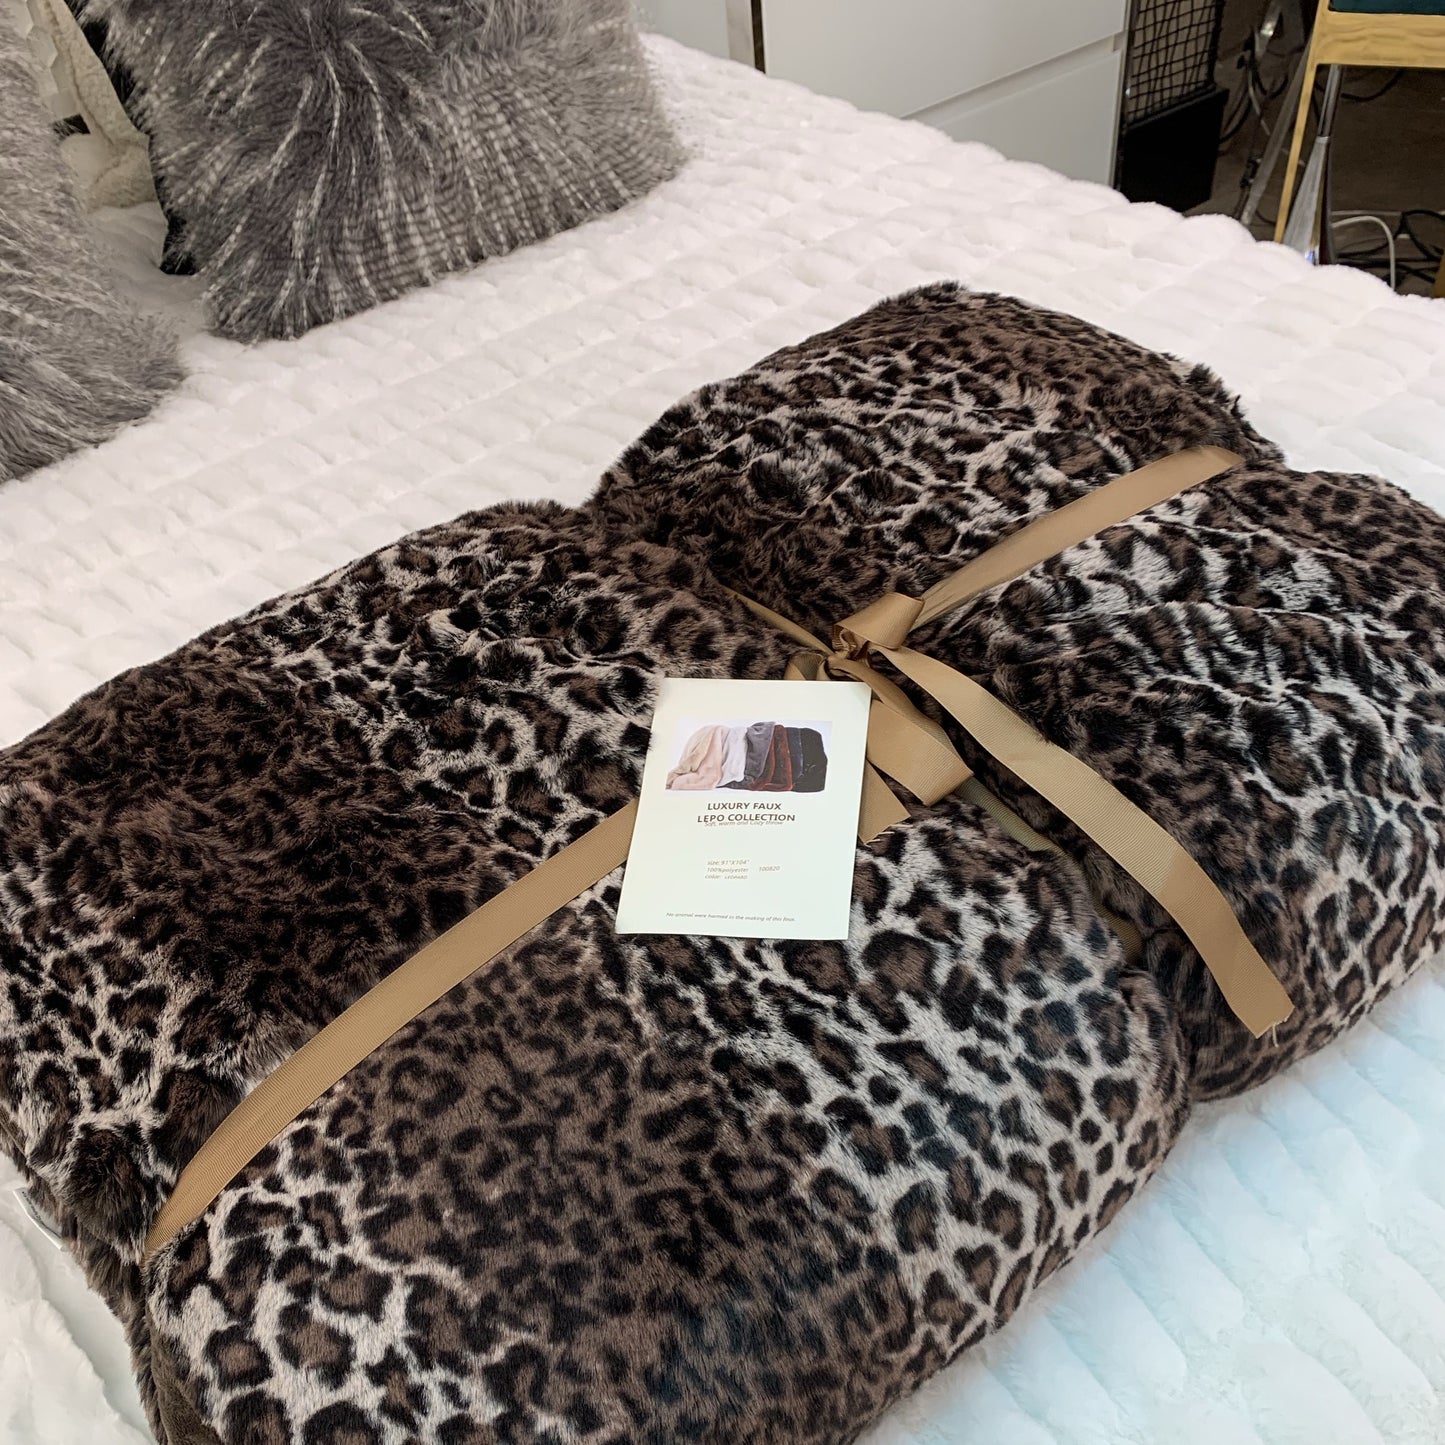 Leopard Cheetah Jaguar Animal Print Cozy Fuzzy Faux Fur King Size Blanket/Quilts/Coverlet/ Throw